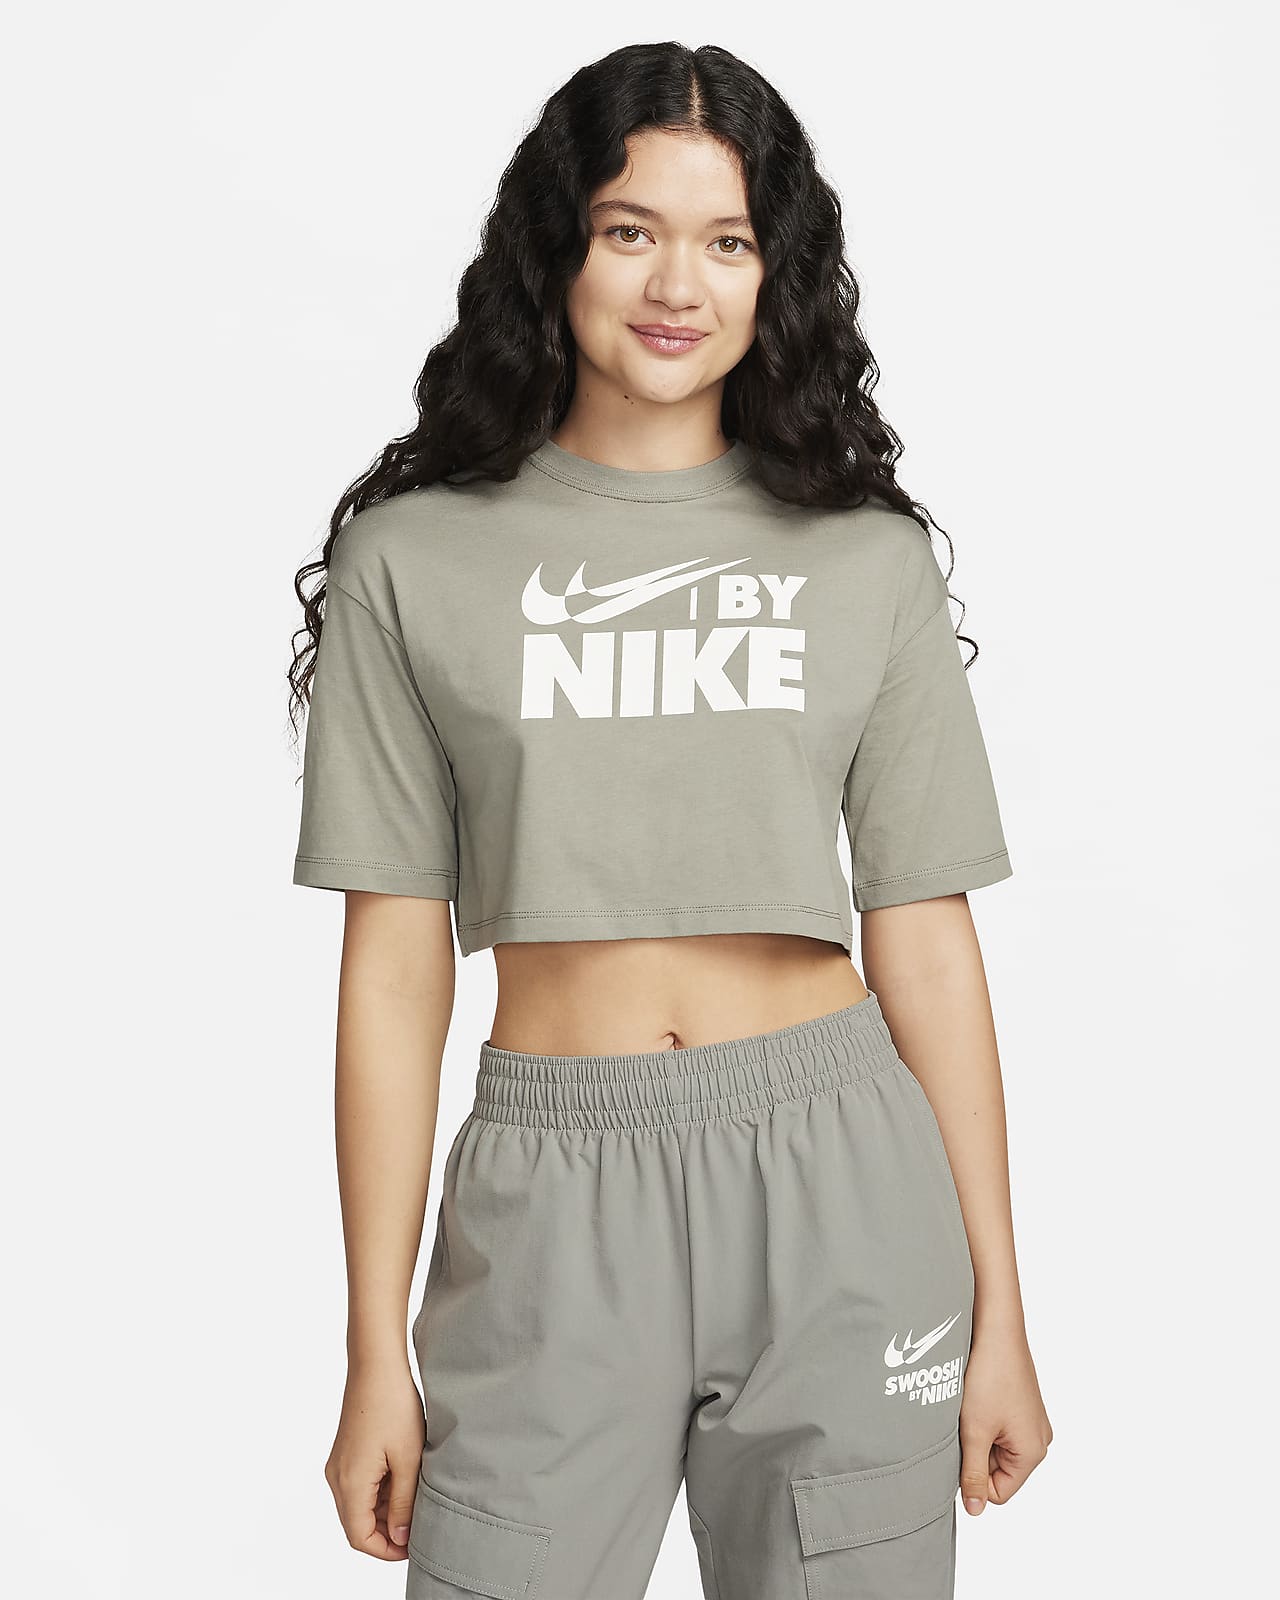 Kort Nike Sportswear-T-shirt til kvinder